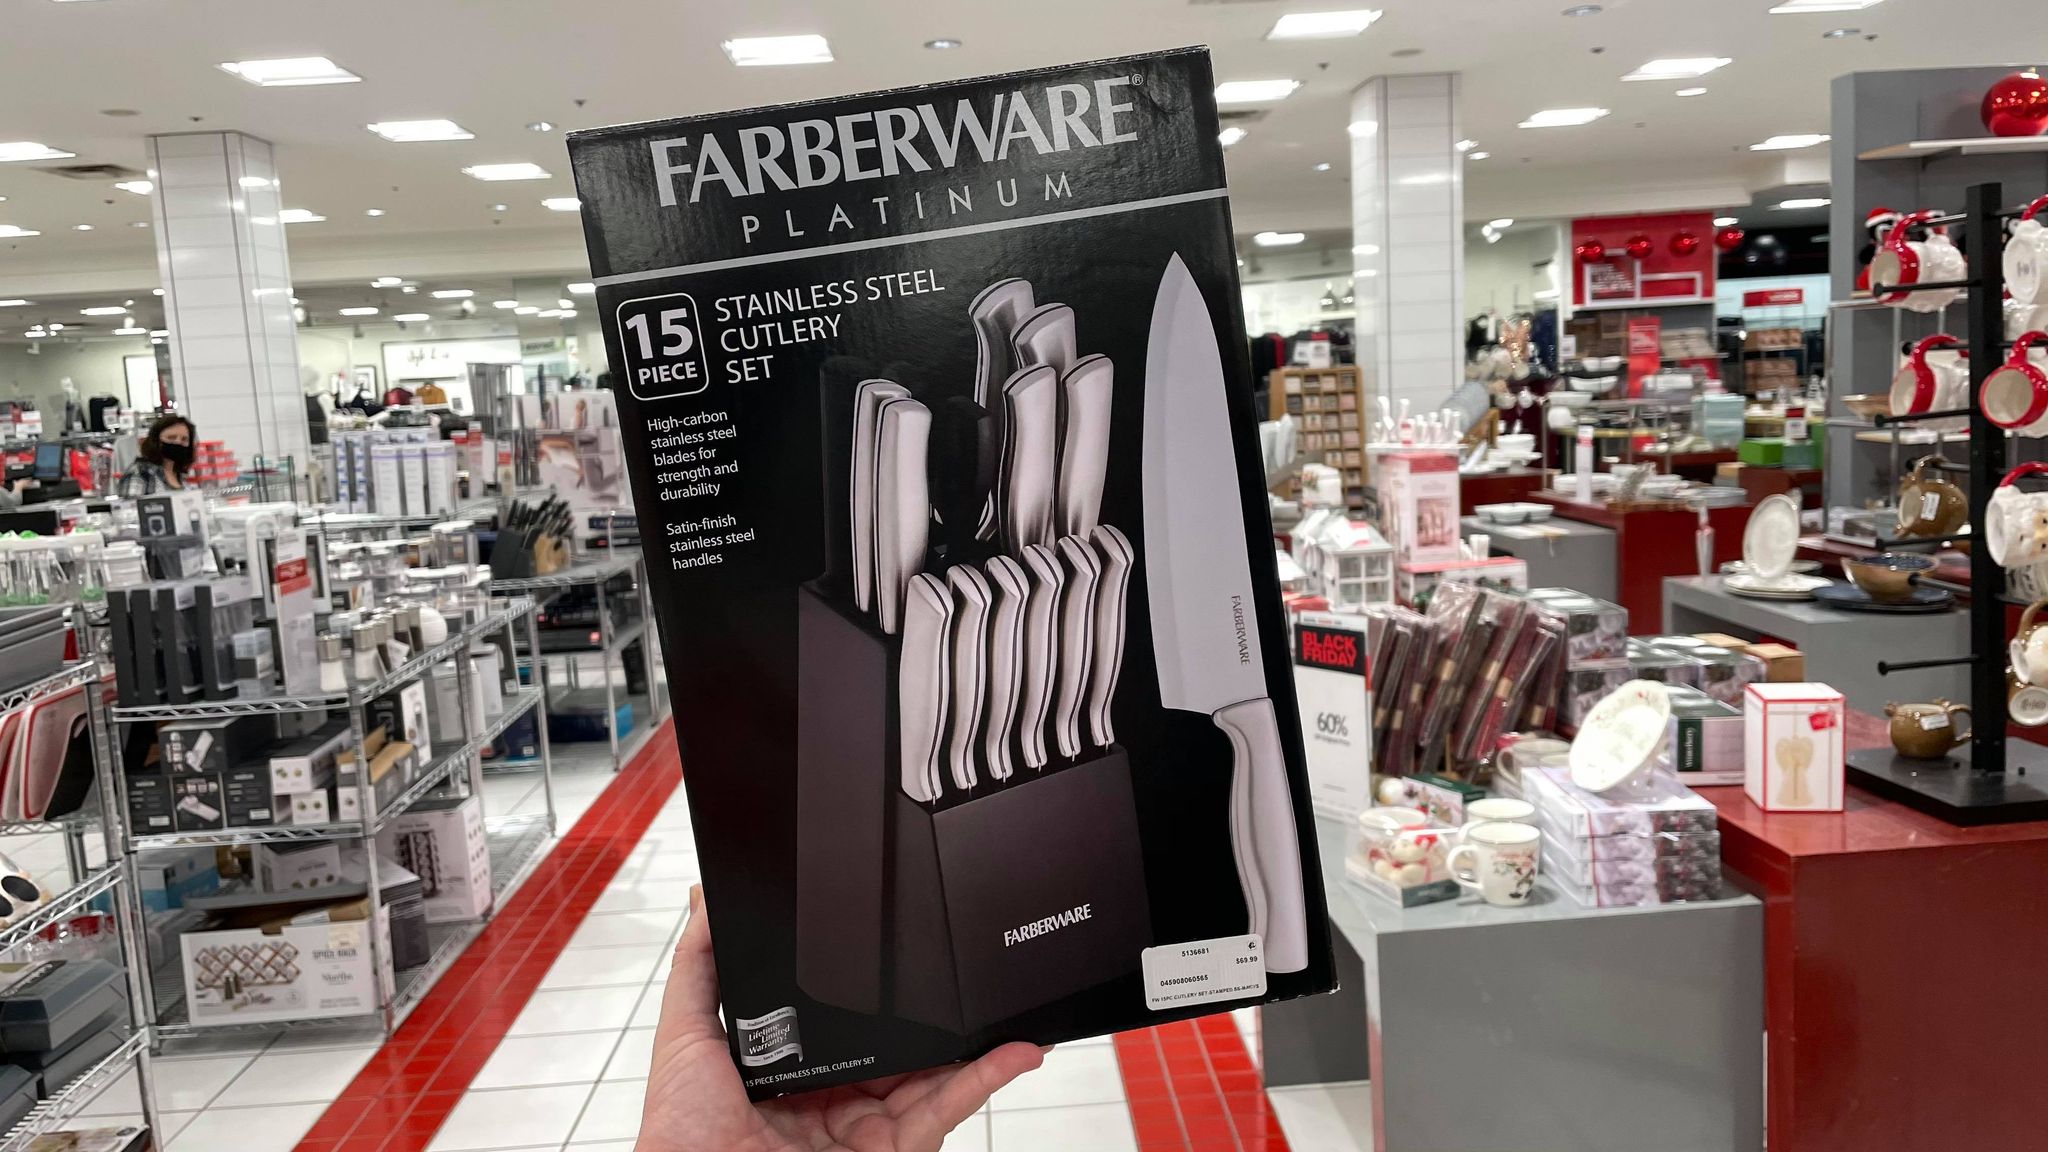 https://thefreebieguy.com/wp-content/uploads/2020/11/Faberware-Platinum-Stainless-steel-cutlery-set.jpg